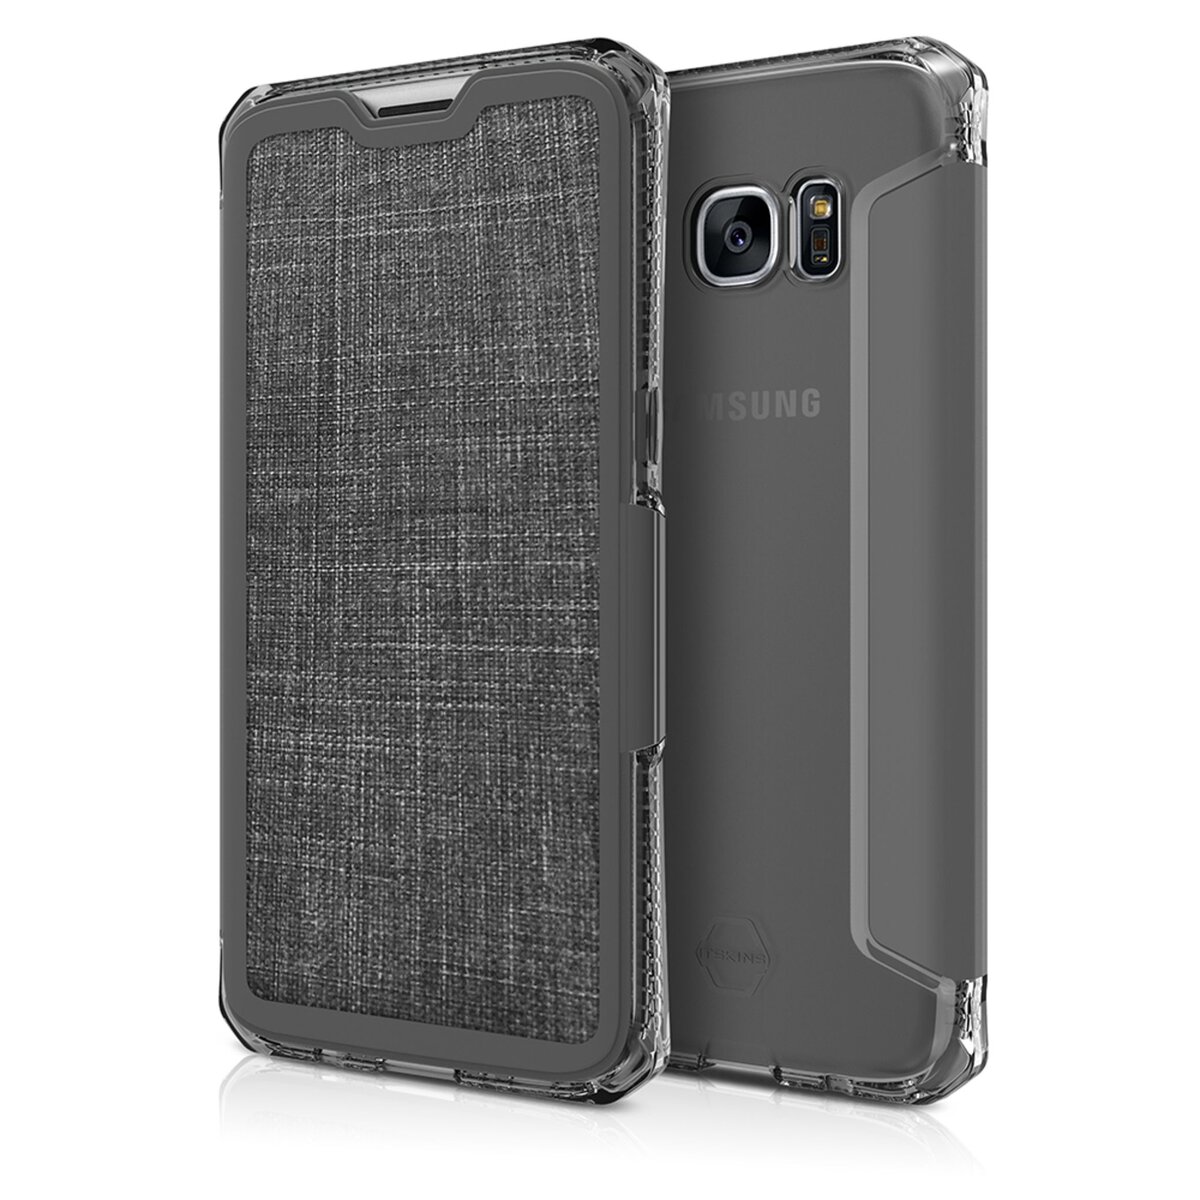 ITSKINS Etui Folio Spectra pour Galaxy S7 - Noir